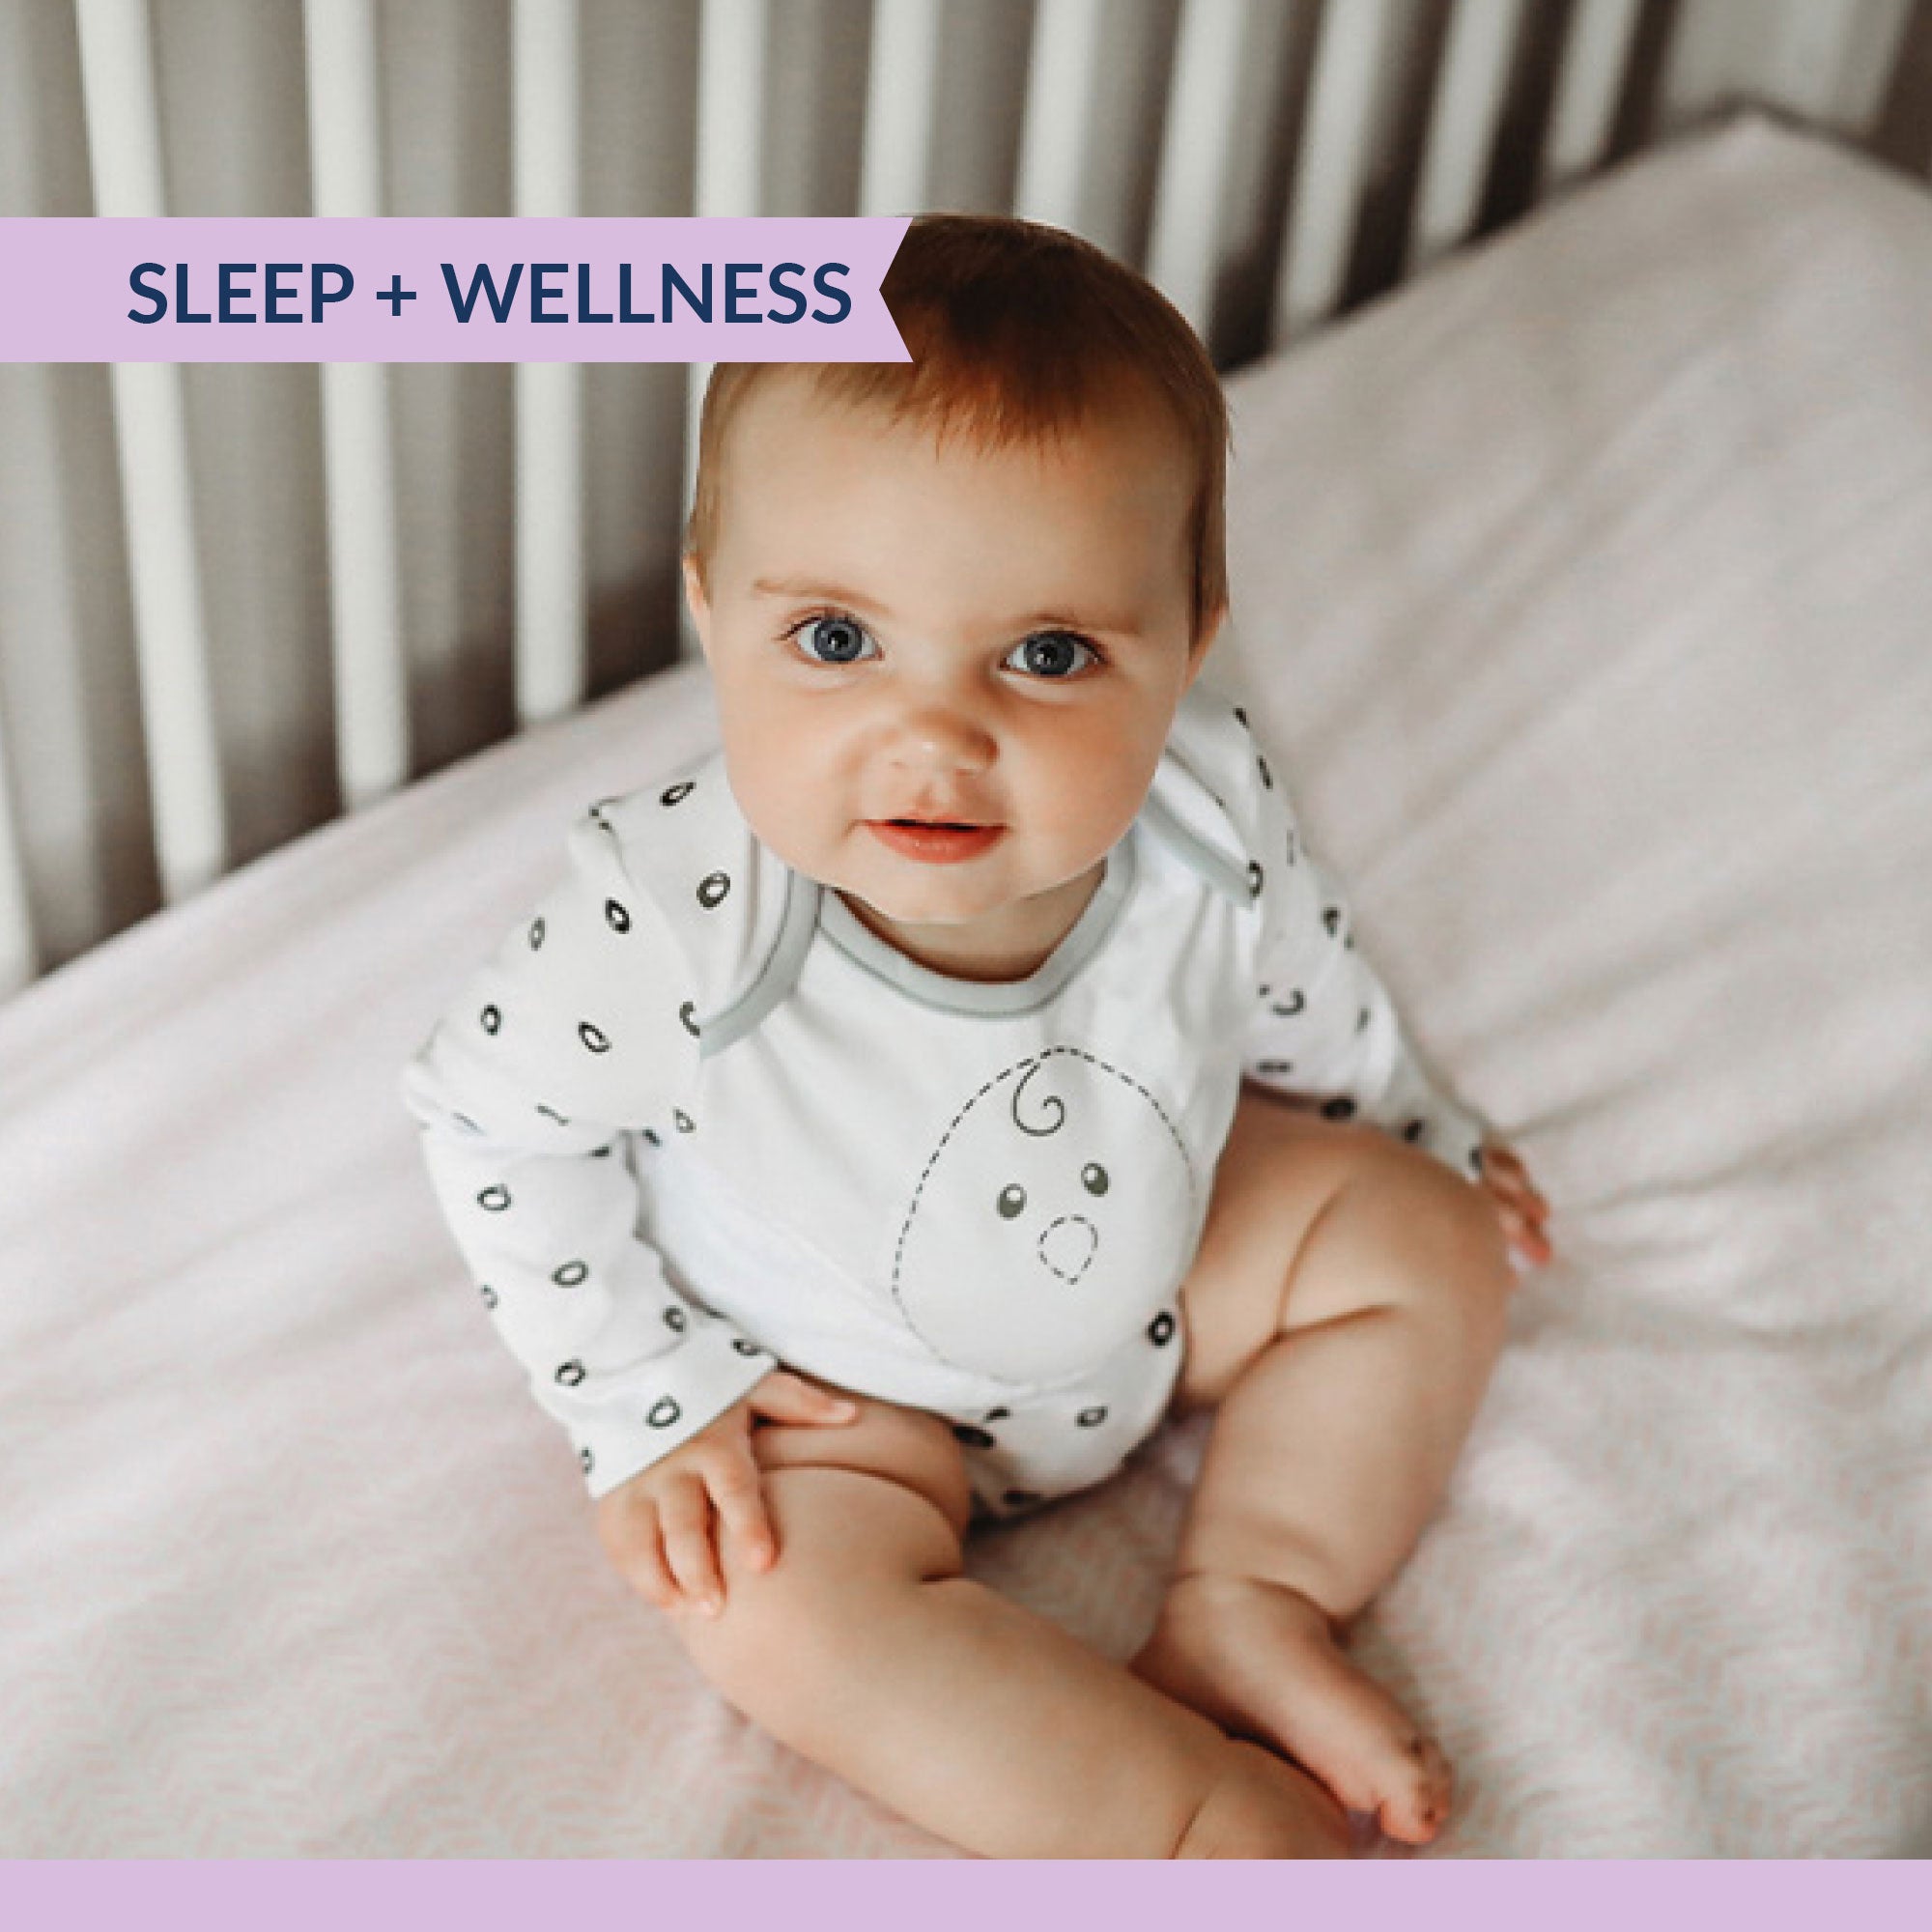 Infant Sleep Aid: Baby Sleep Medicine, Routines, Sleepwear, and More to Help Your Newborn